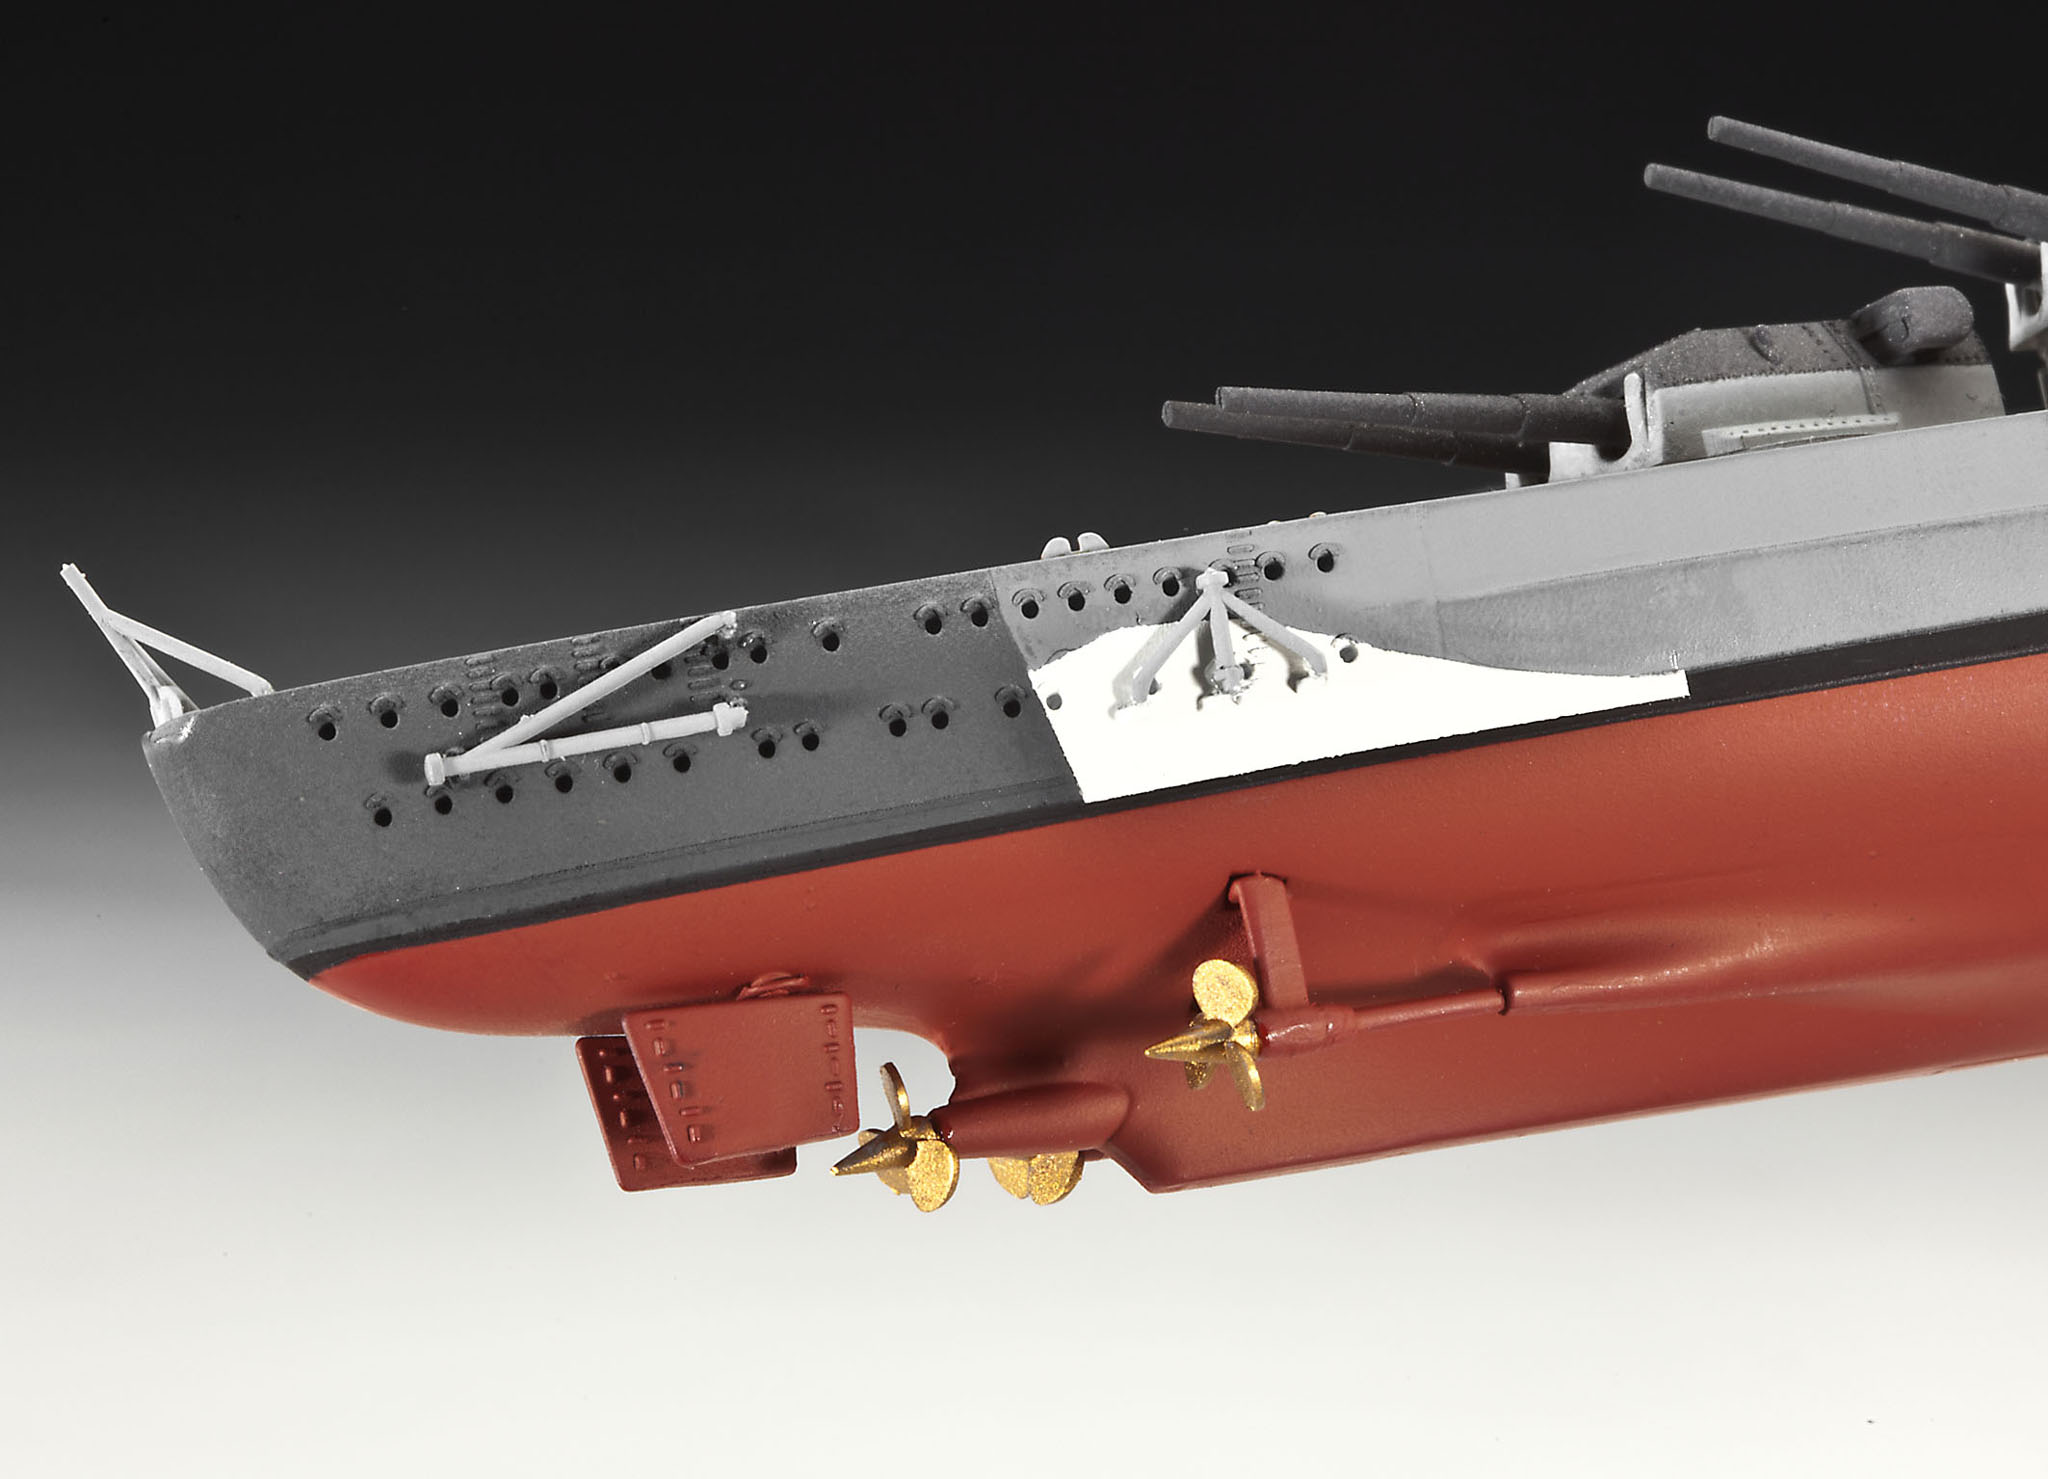 Battleship Bismarck - Battleship Bismarck